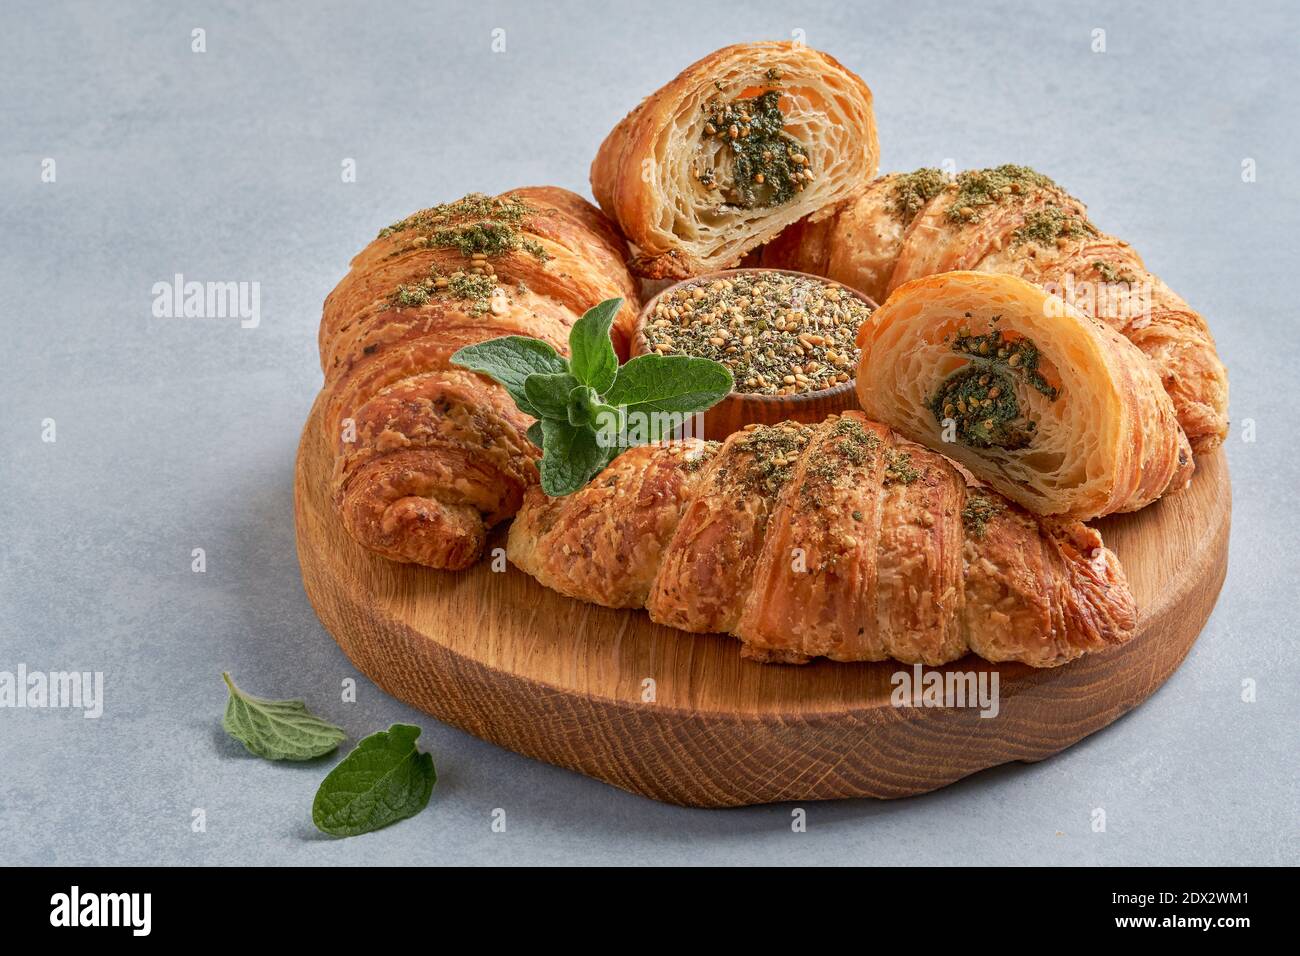 Croissants with zaatar on wooden board. Closeup Stock Photo